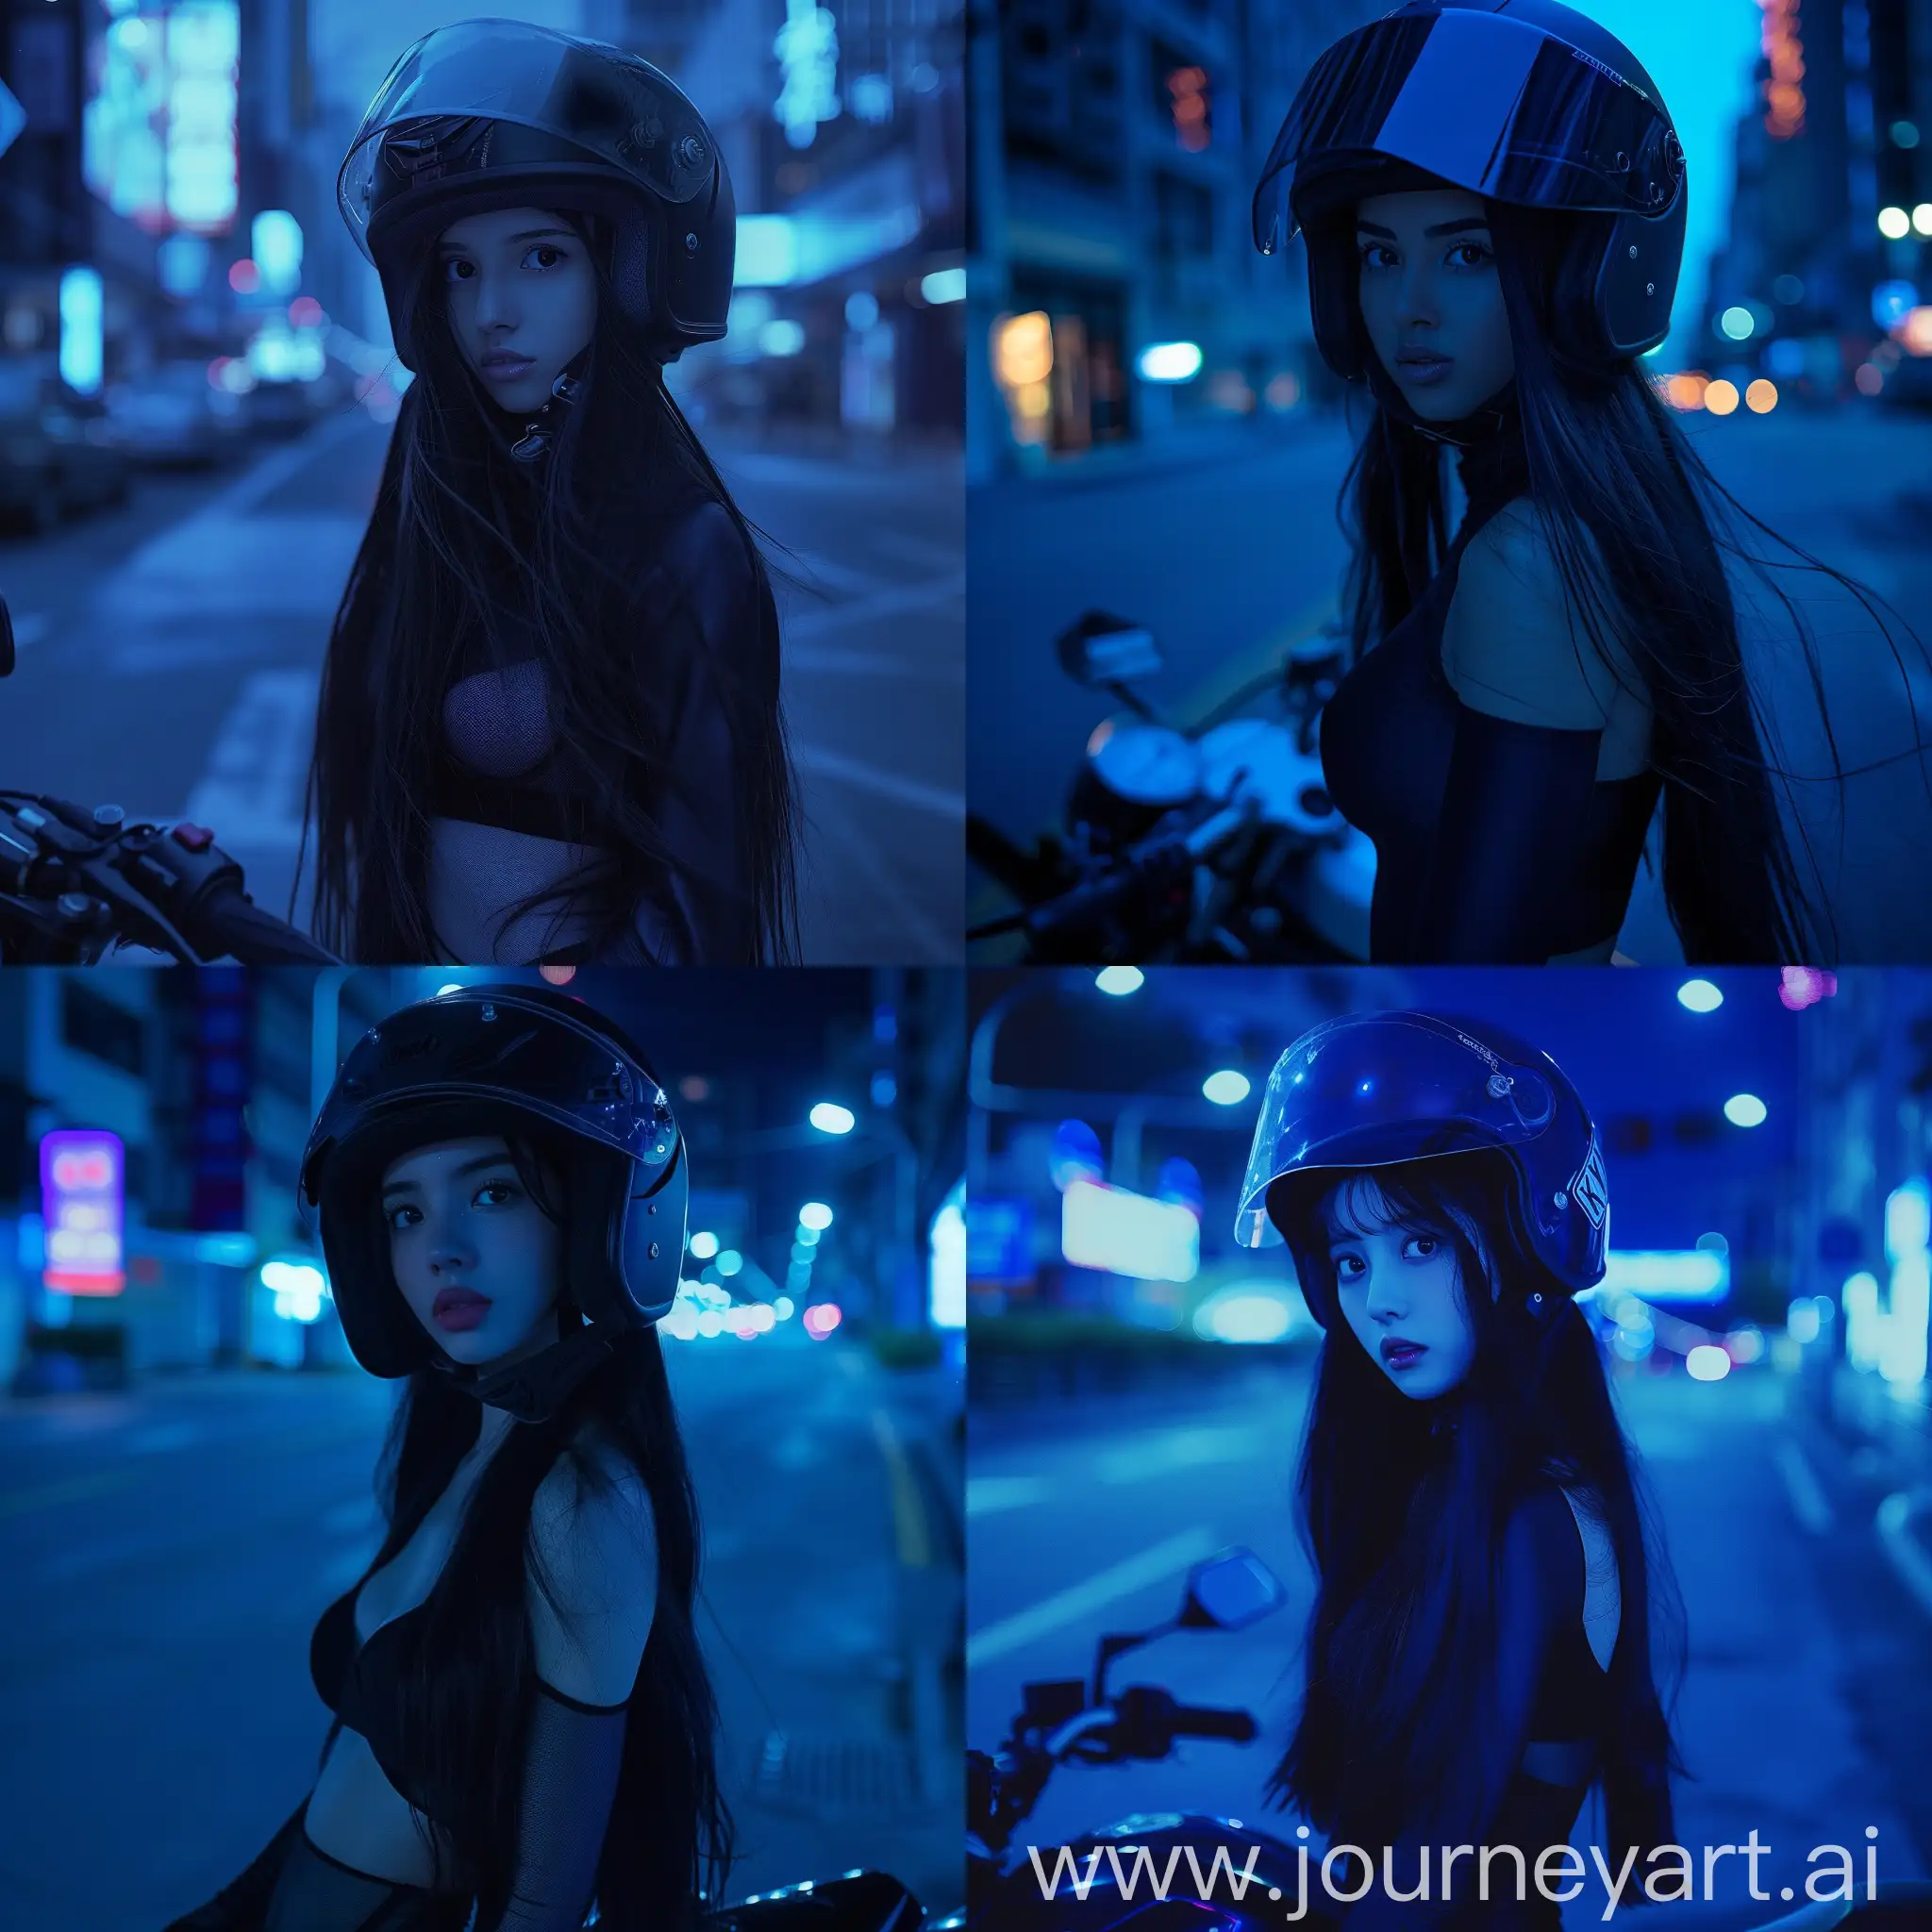 Urban-Night-Portrait-Girl-with-Long-Black-Hair-and-Motorcycle-Helmet